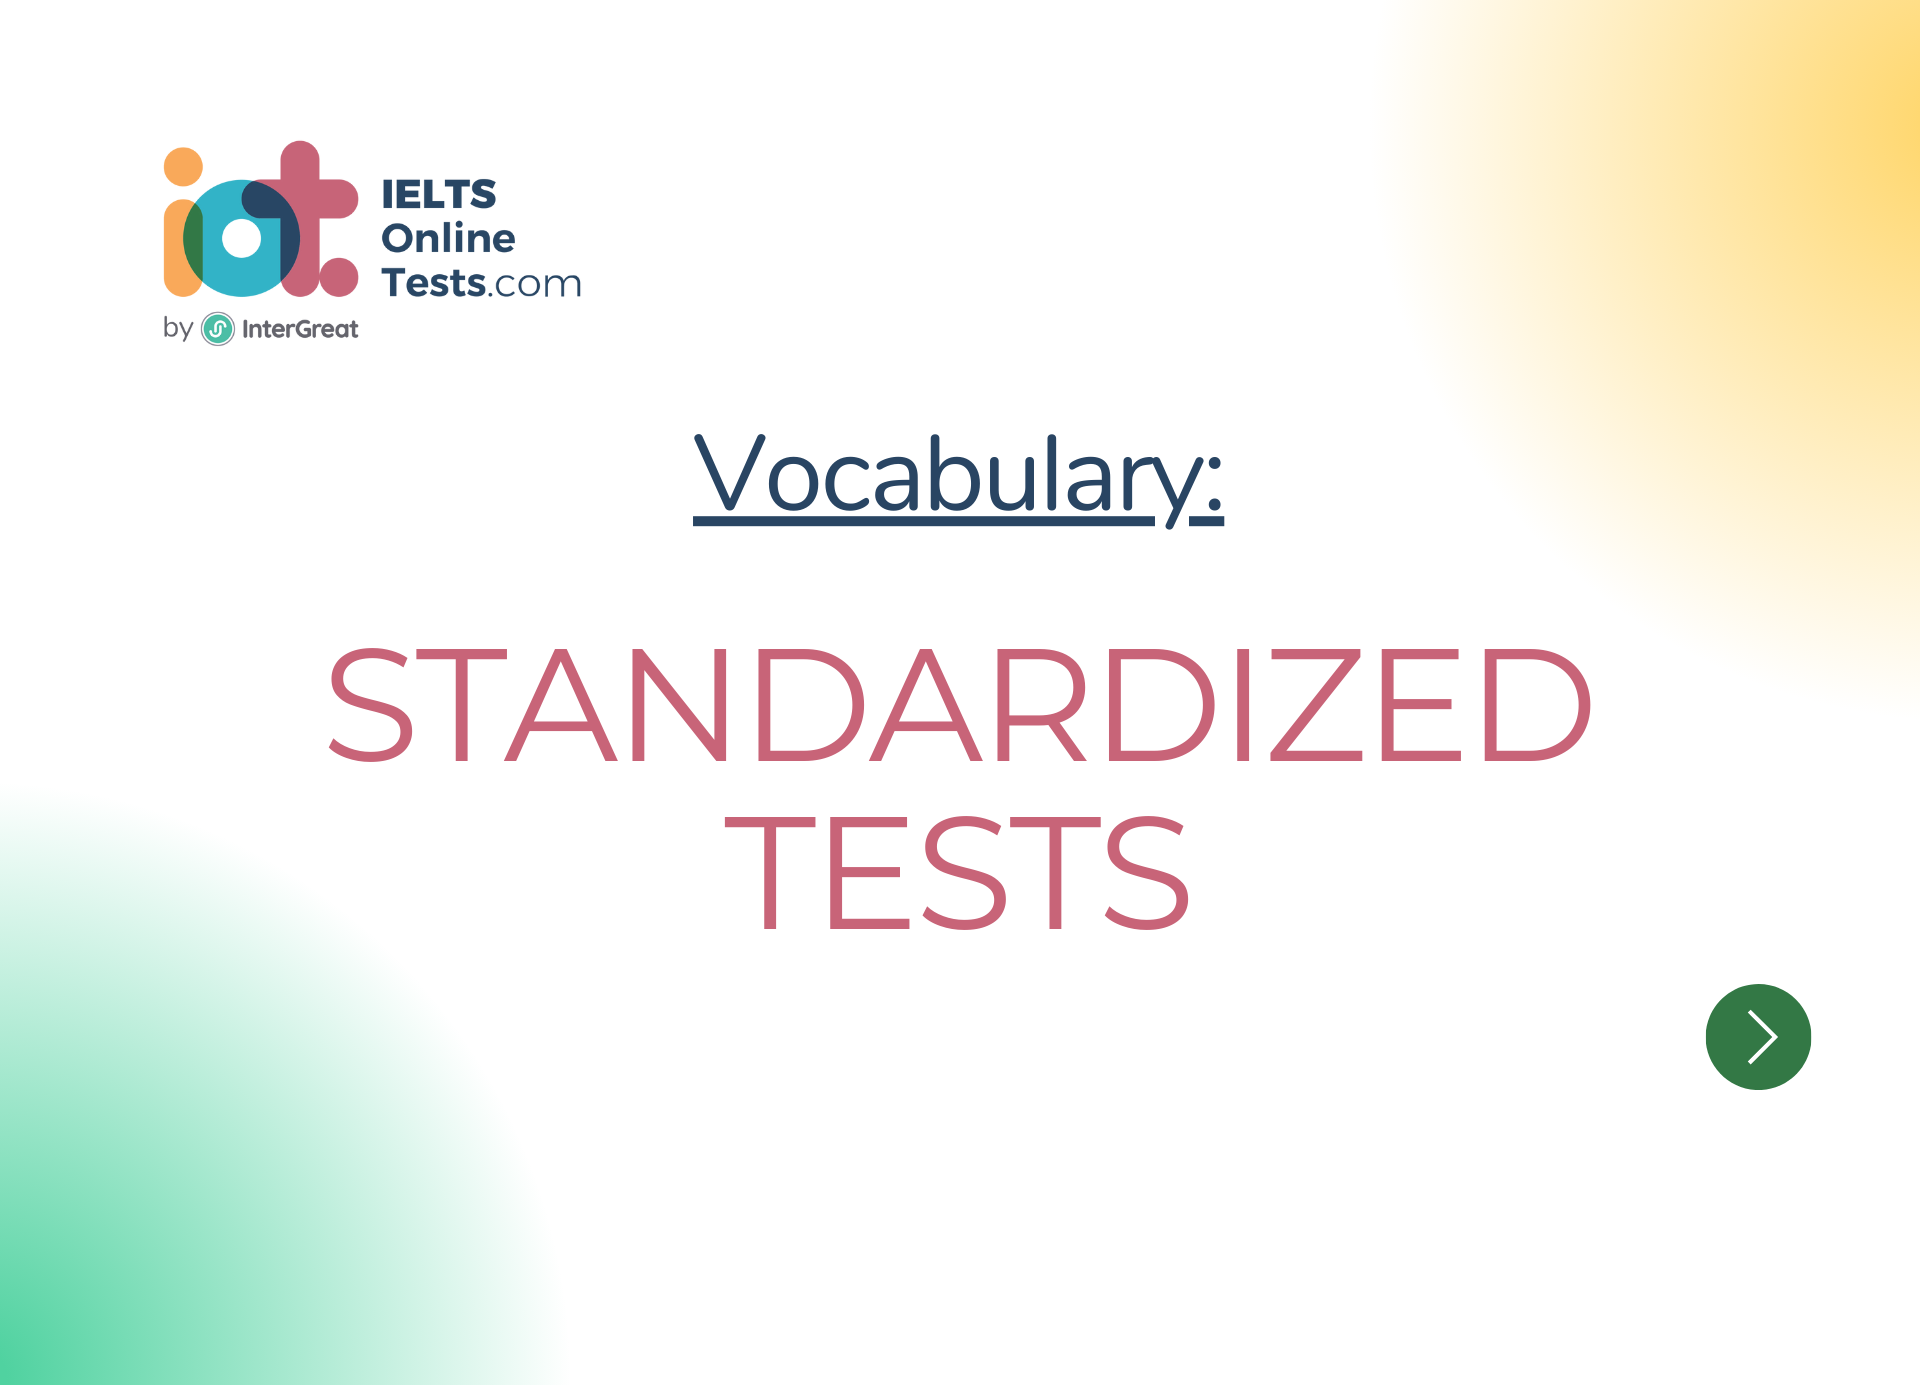 Standardized tests